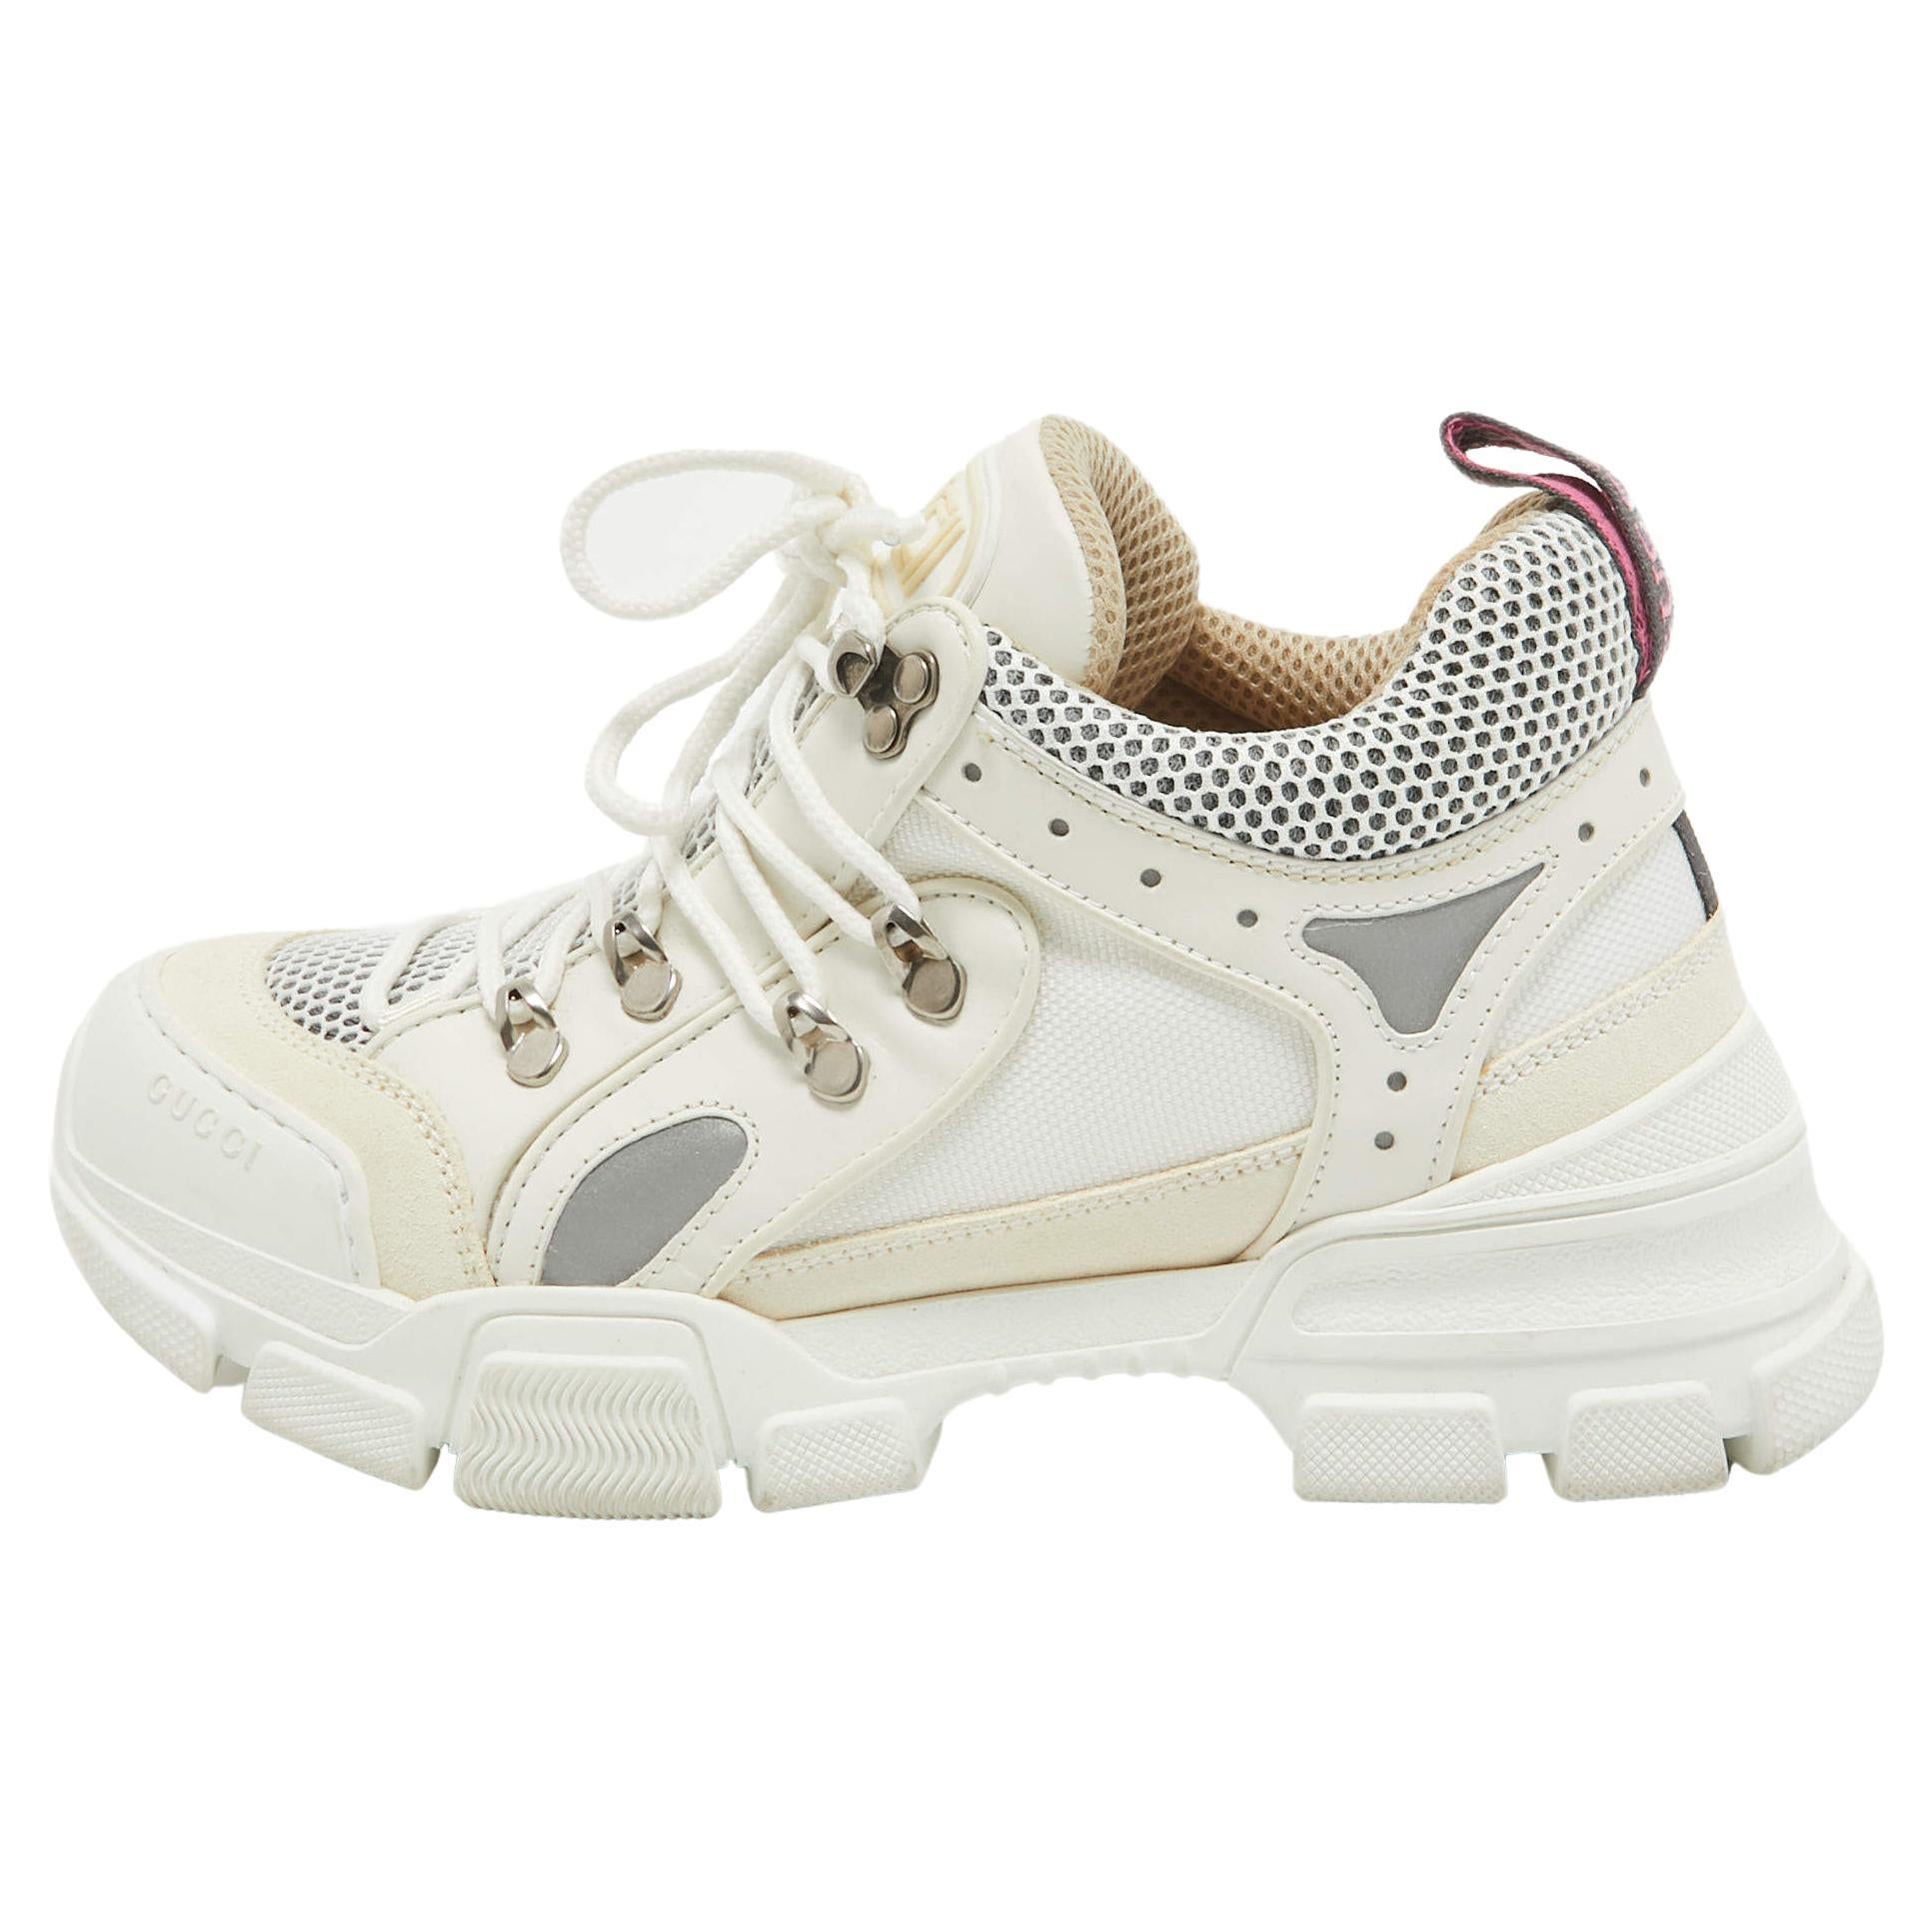 Gucci White/Cream Canvas Leather Flashtrek Sneakers Size 39.5 For Sale